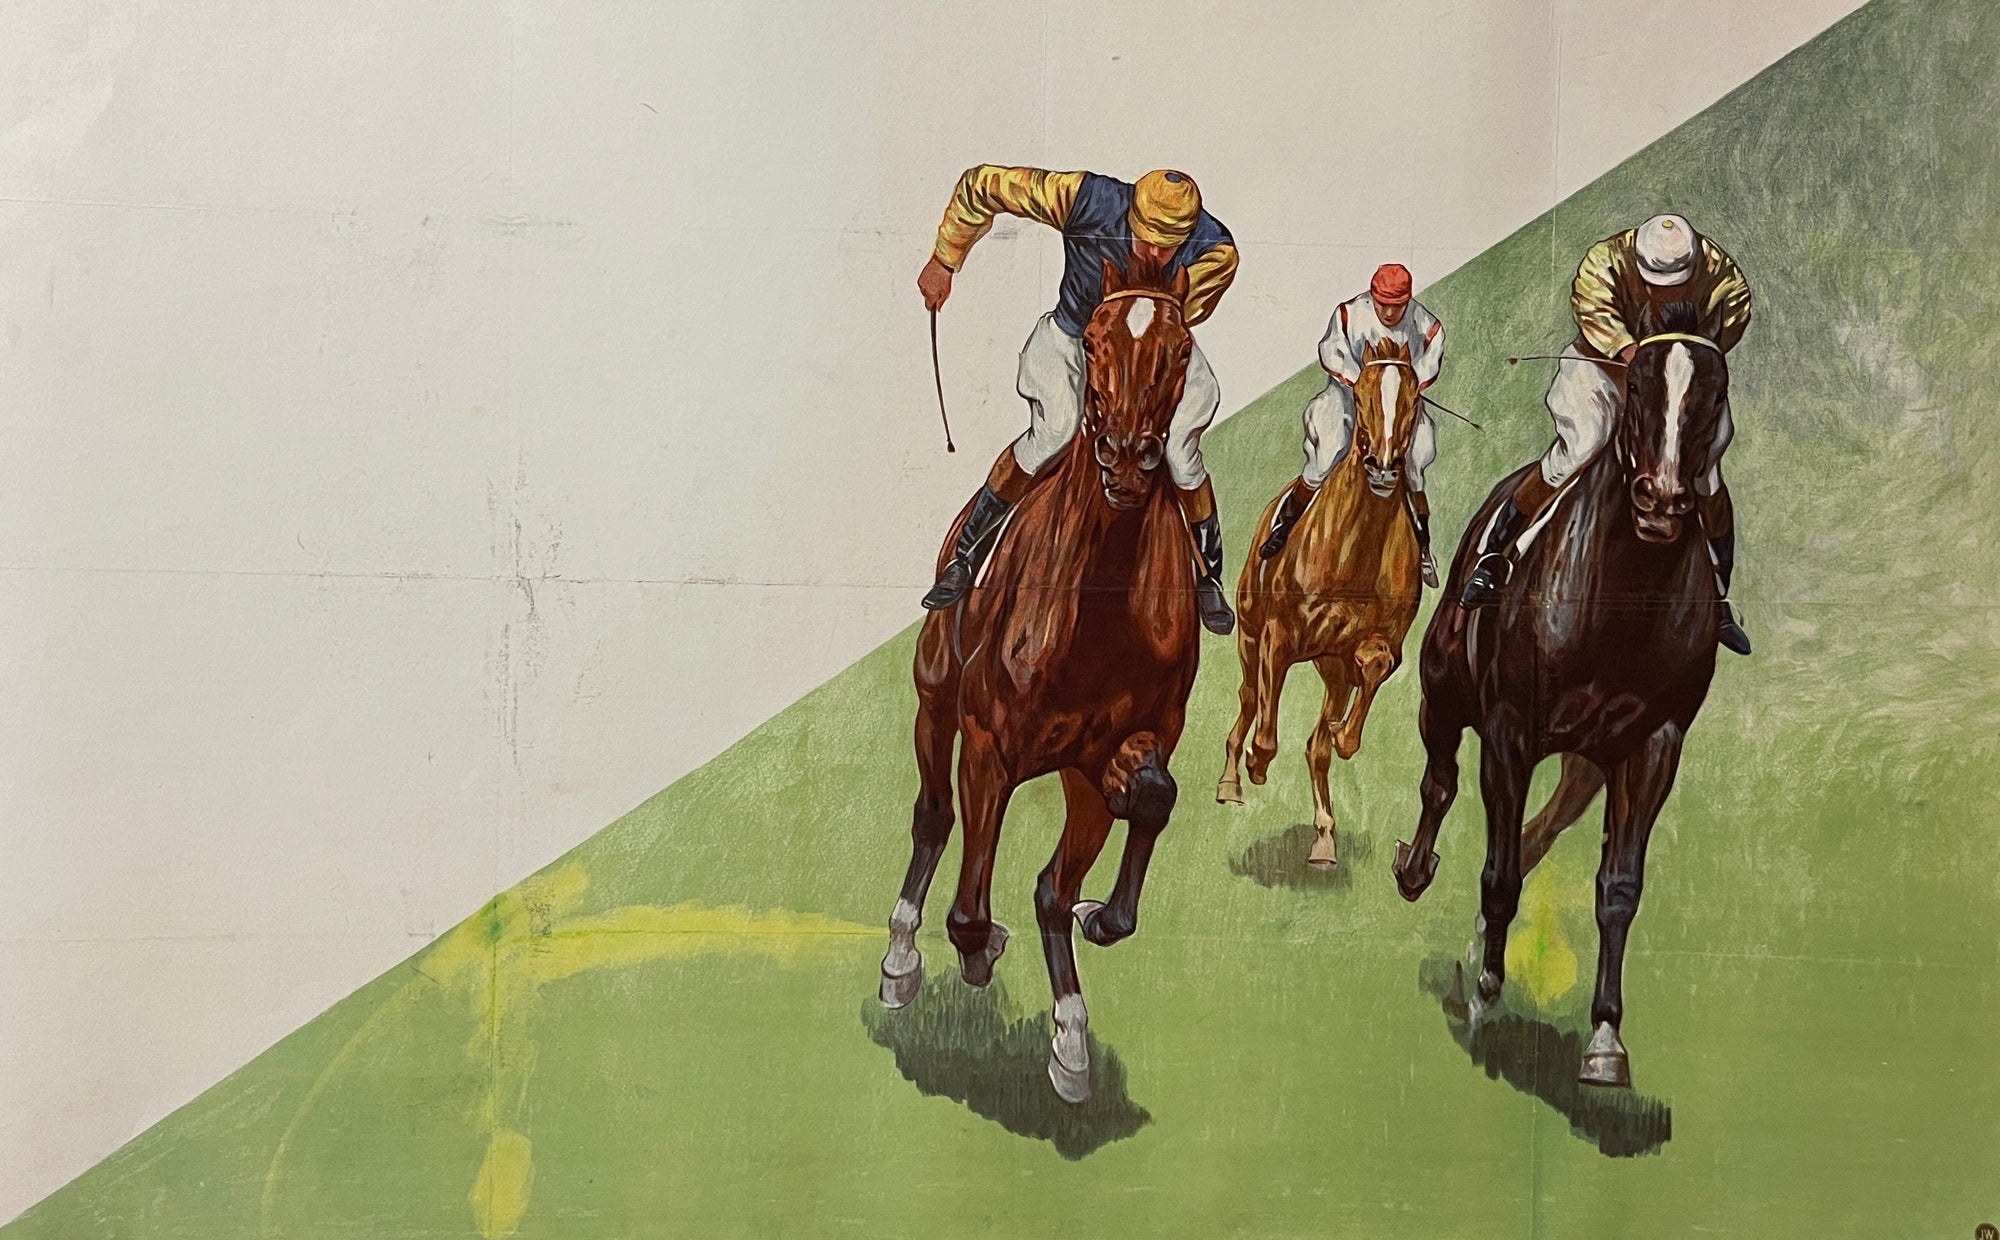 Horse Racing Vintage Poster